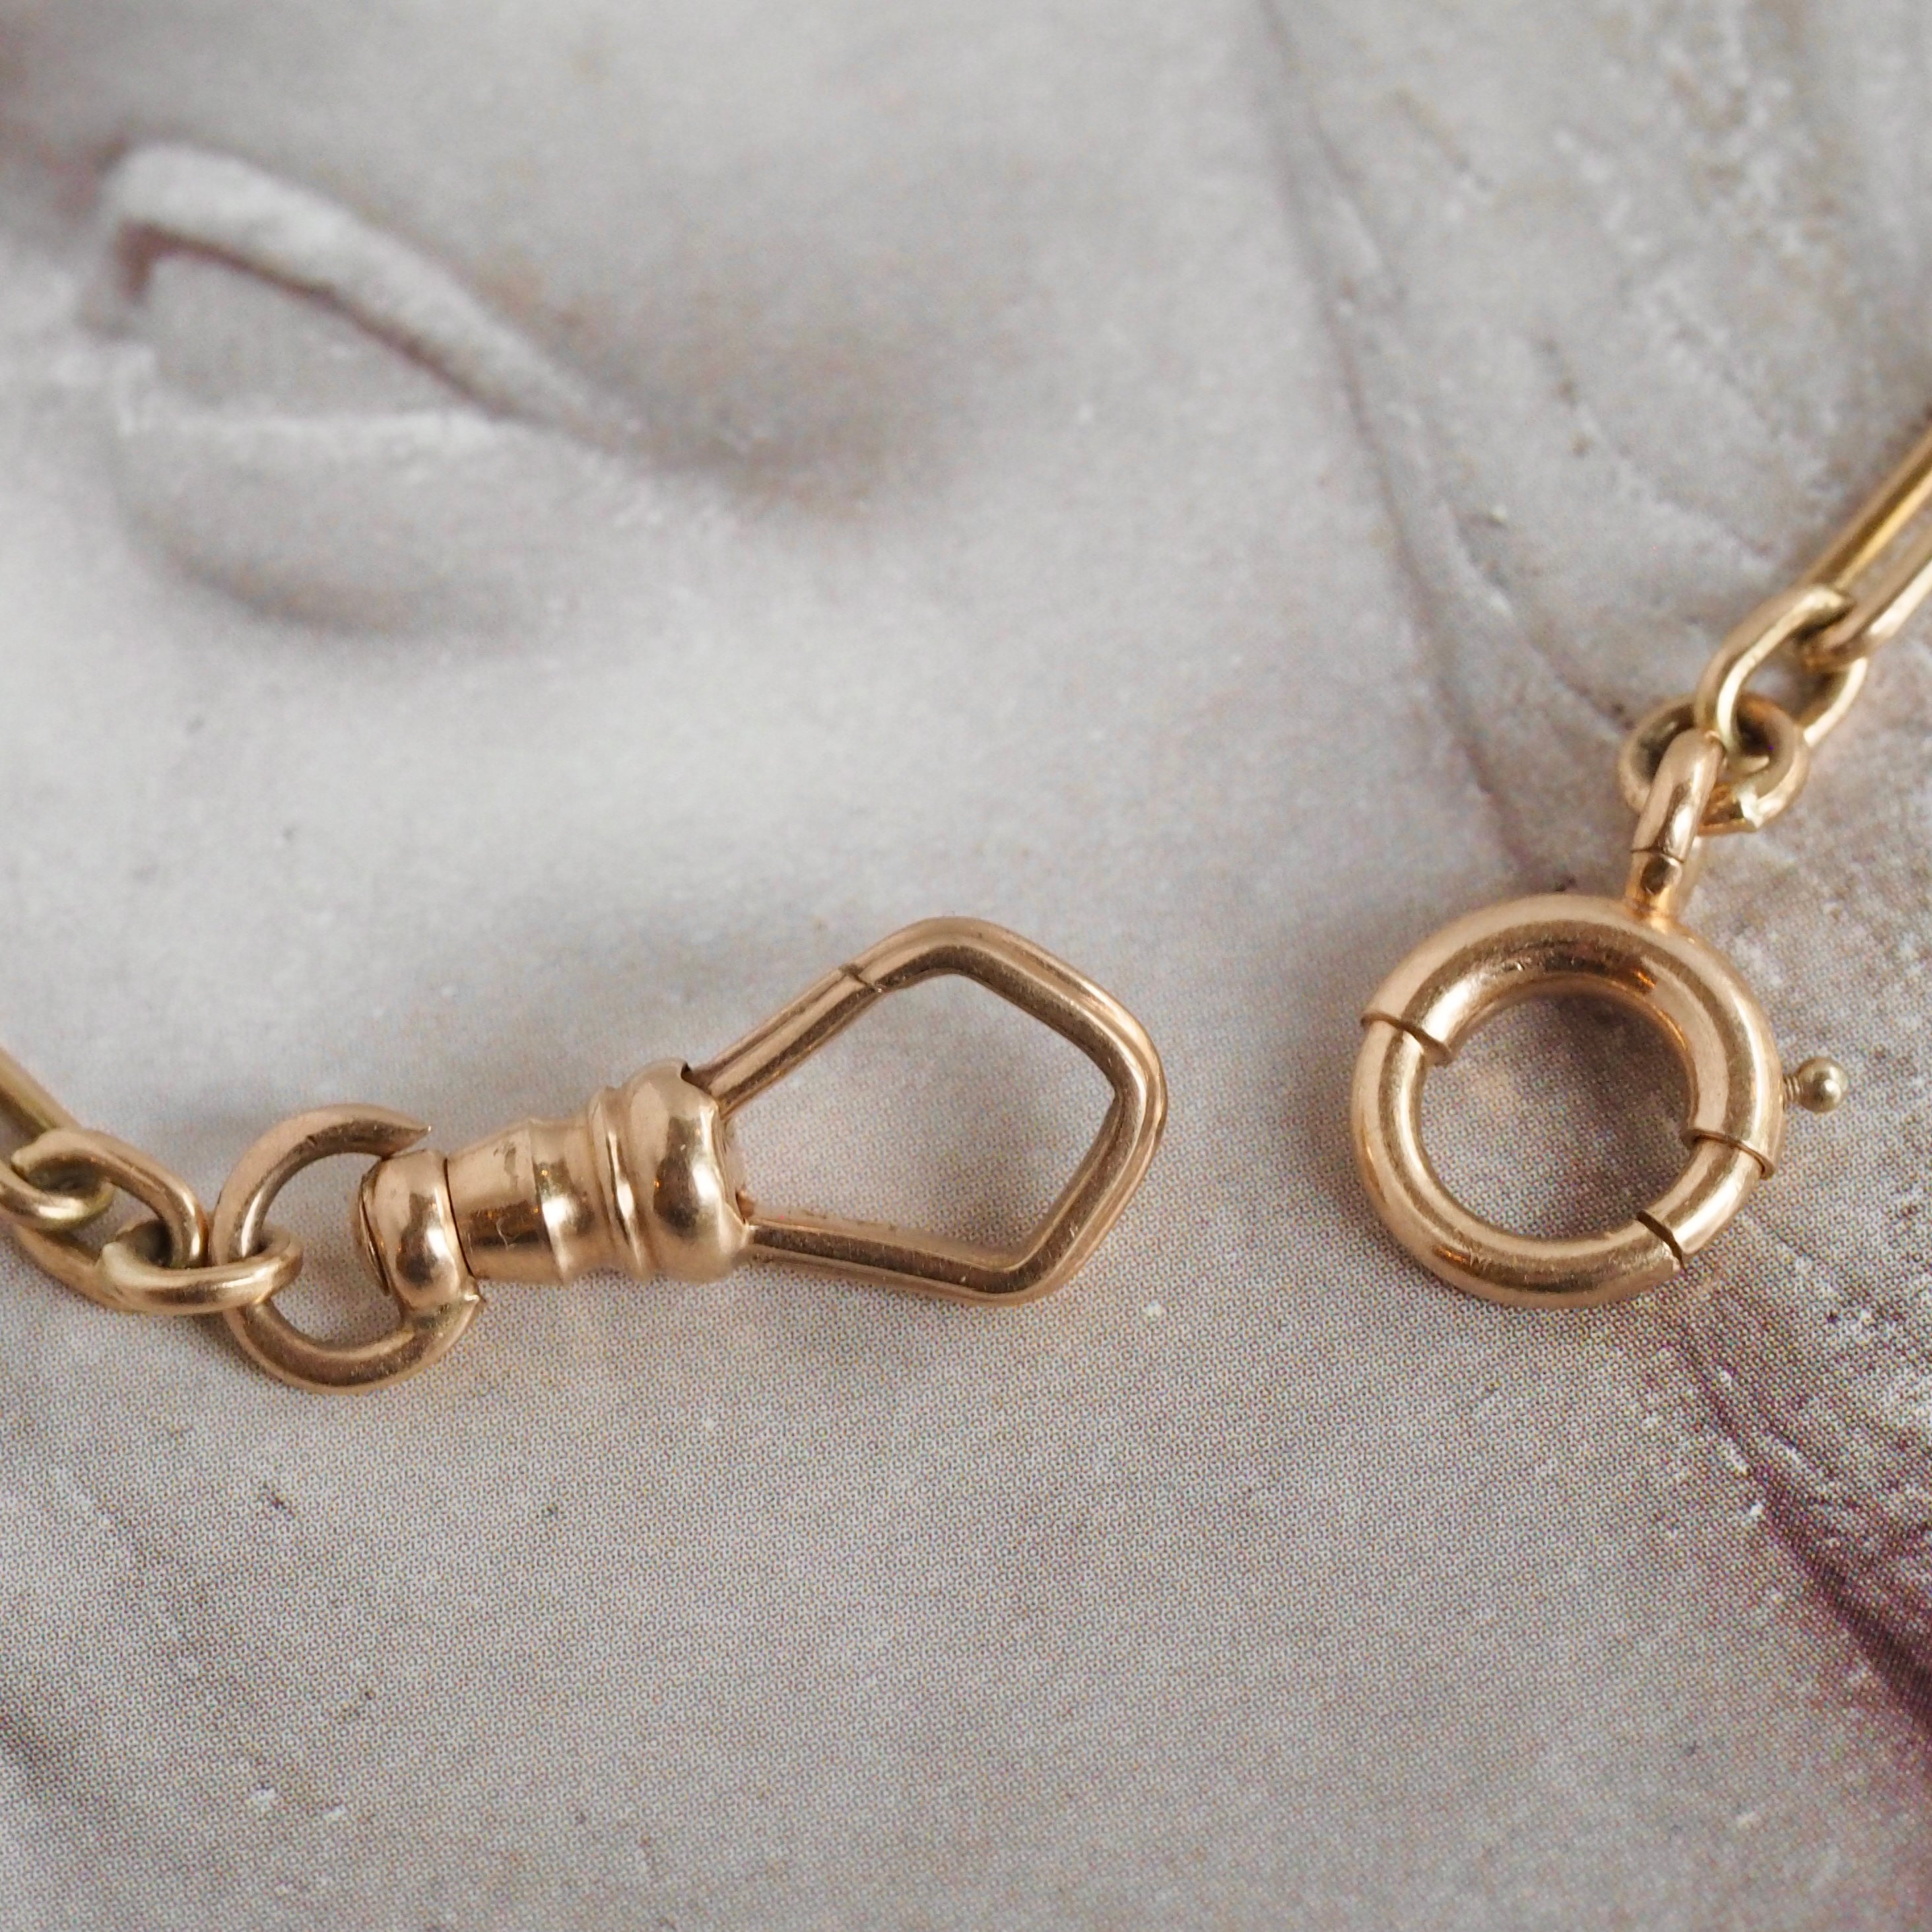 Antique 14k Gold Solid Watchchain Trombone Link Double Wrap Bracelet